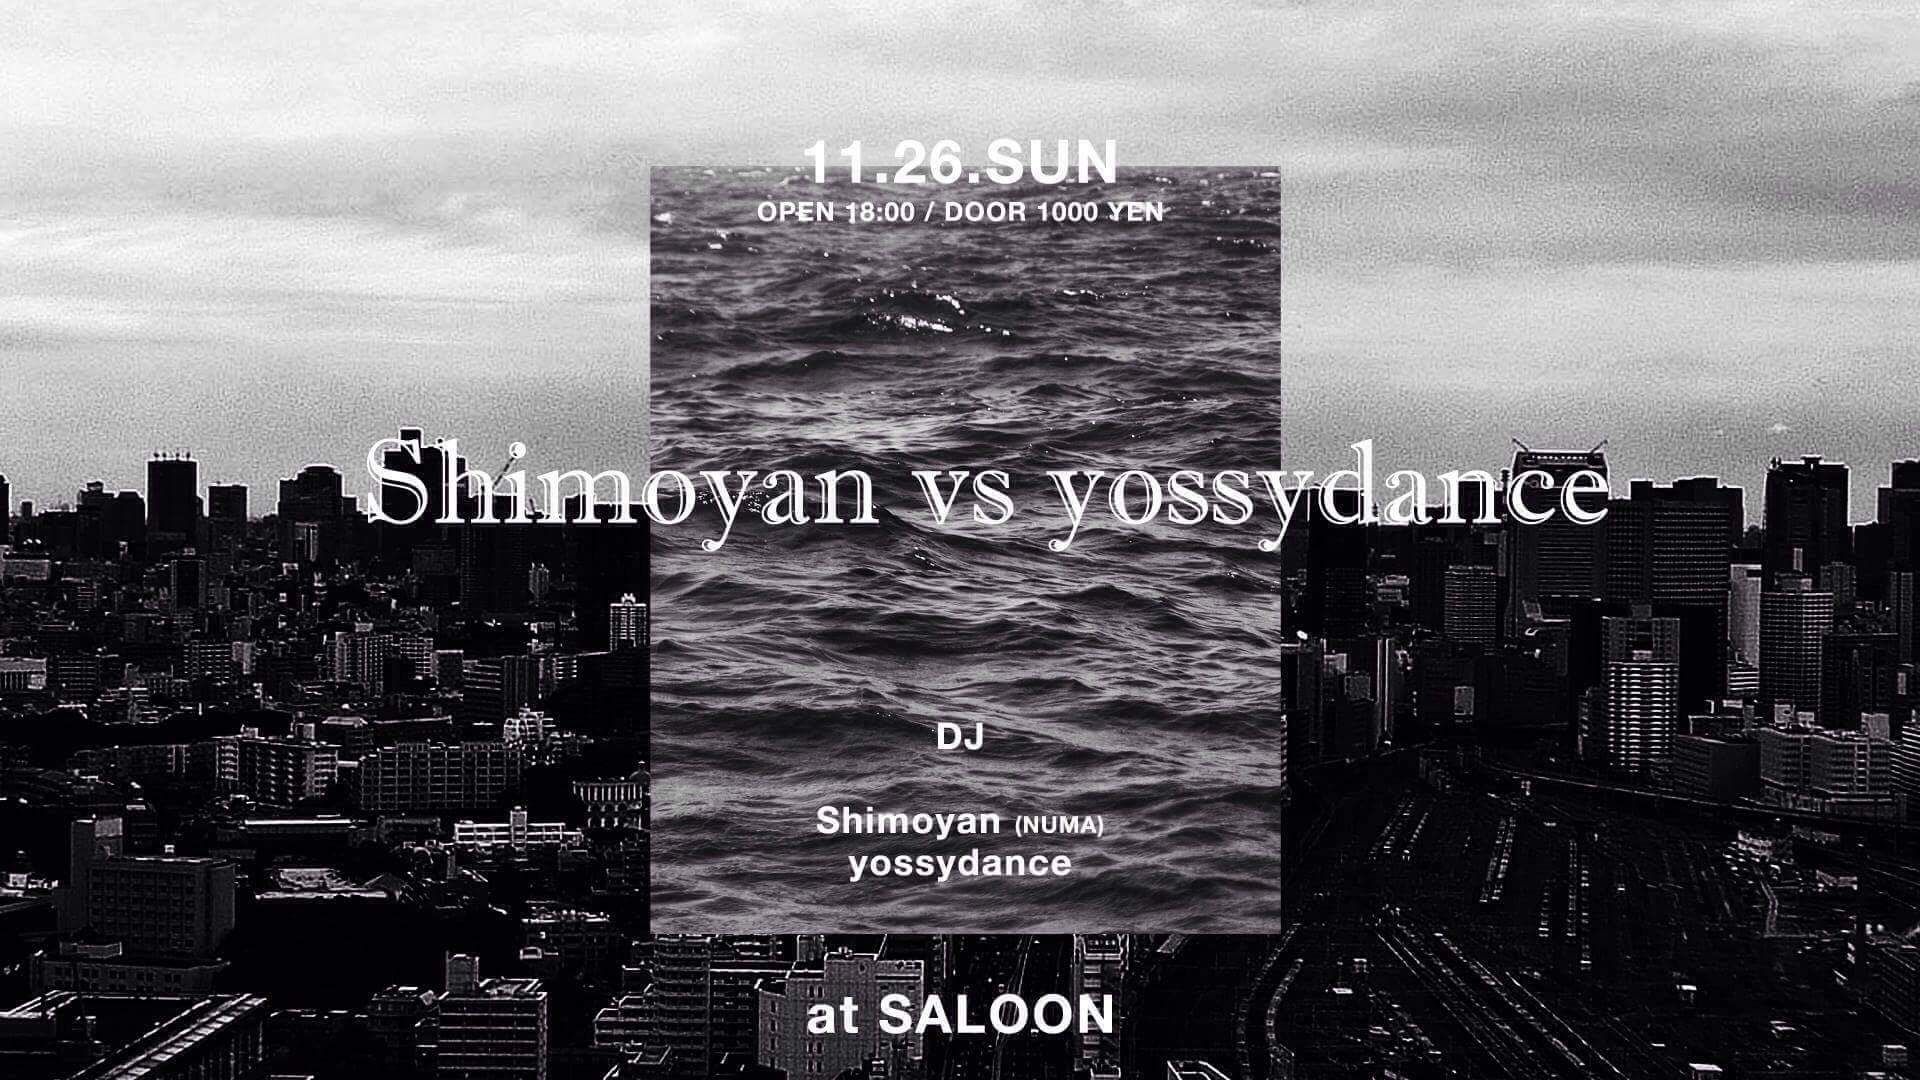 Shimoyan vs yossydance